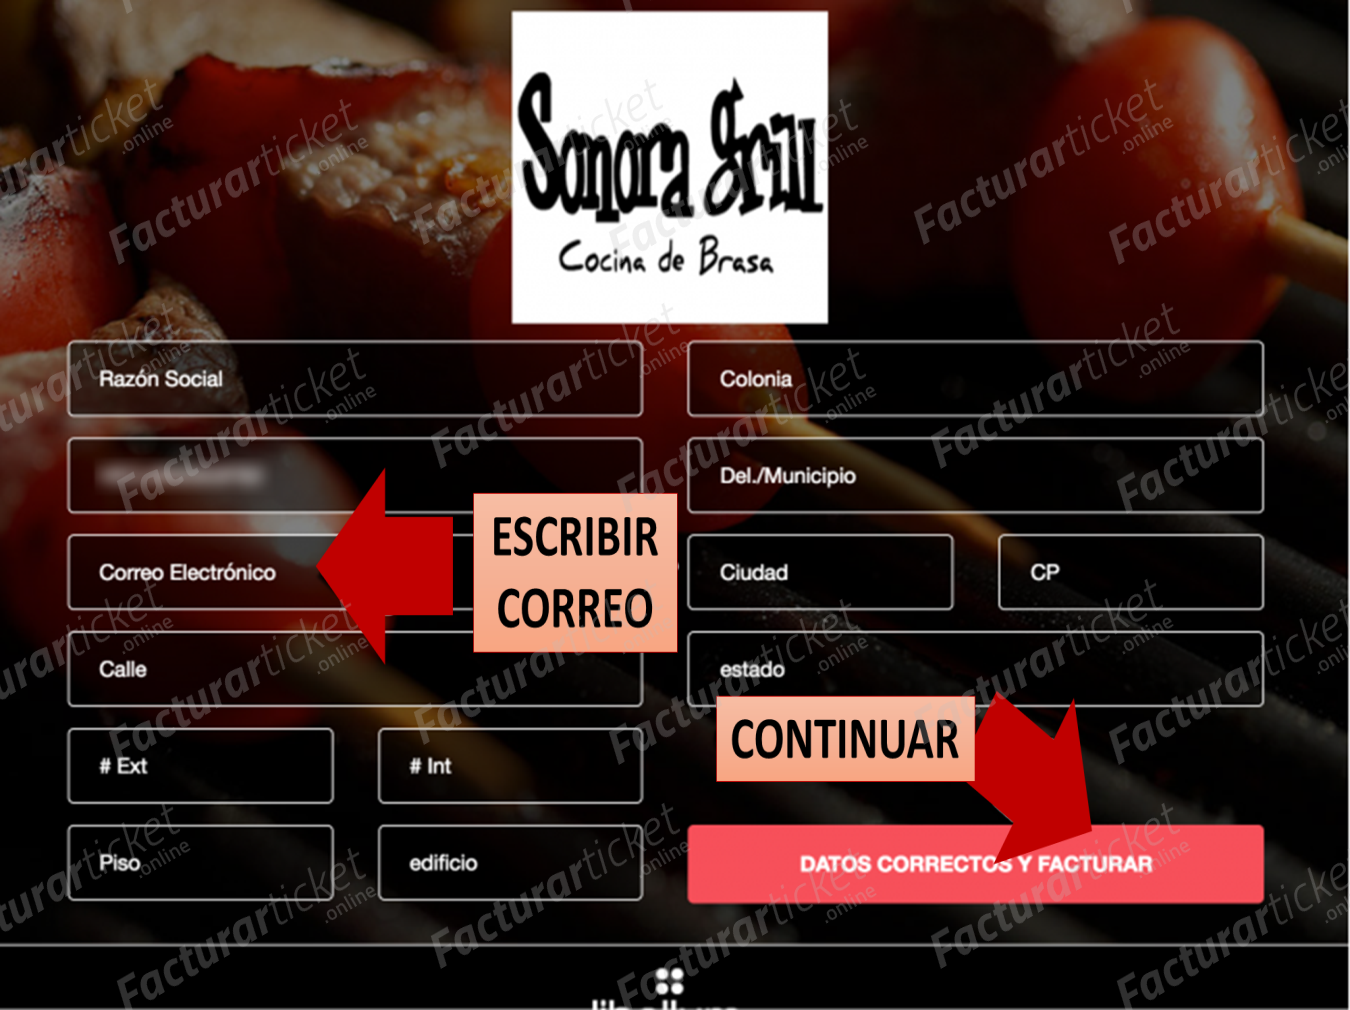 Facturación Ticket Sonora Grill